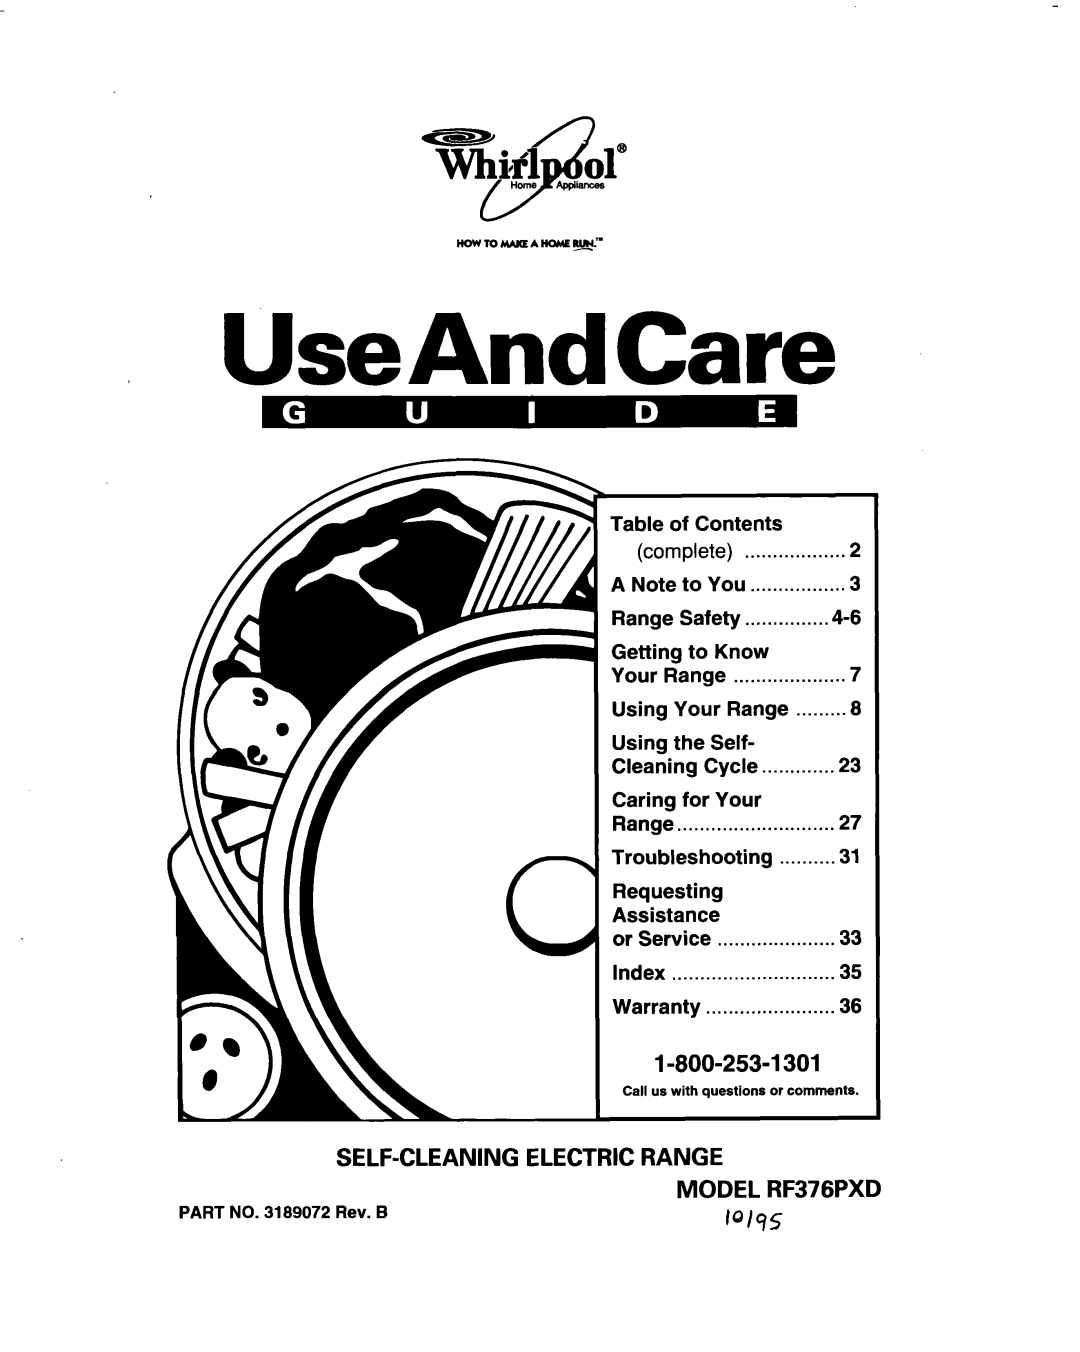 Whirlpool warranty UseAndCare, SELF-CLEANINGELECTRIC RANGE MODEL RF376PXD 